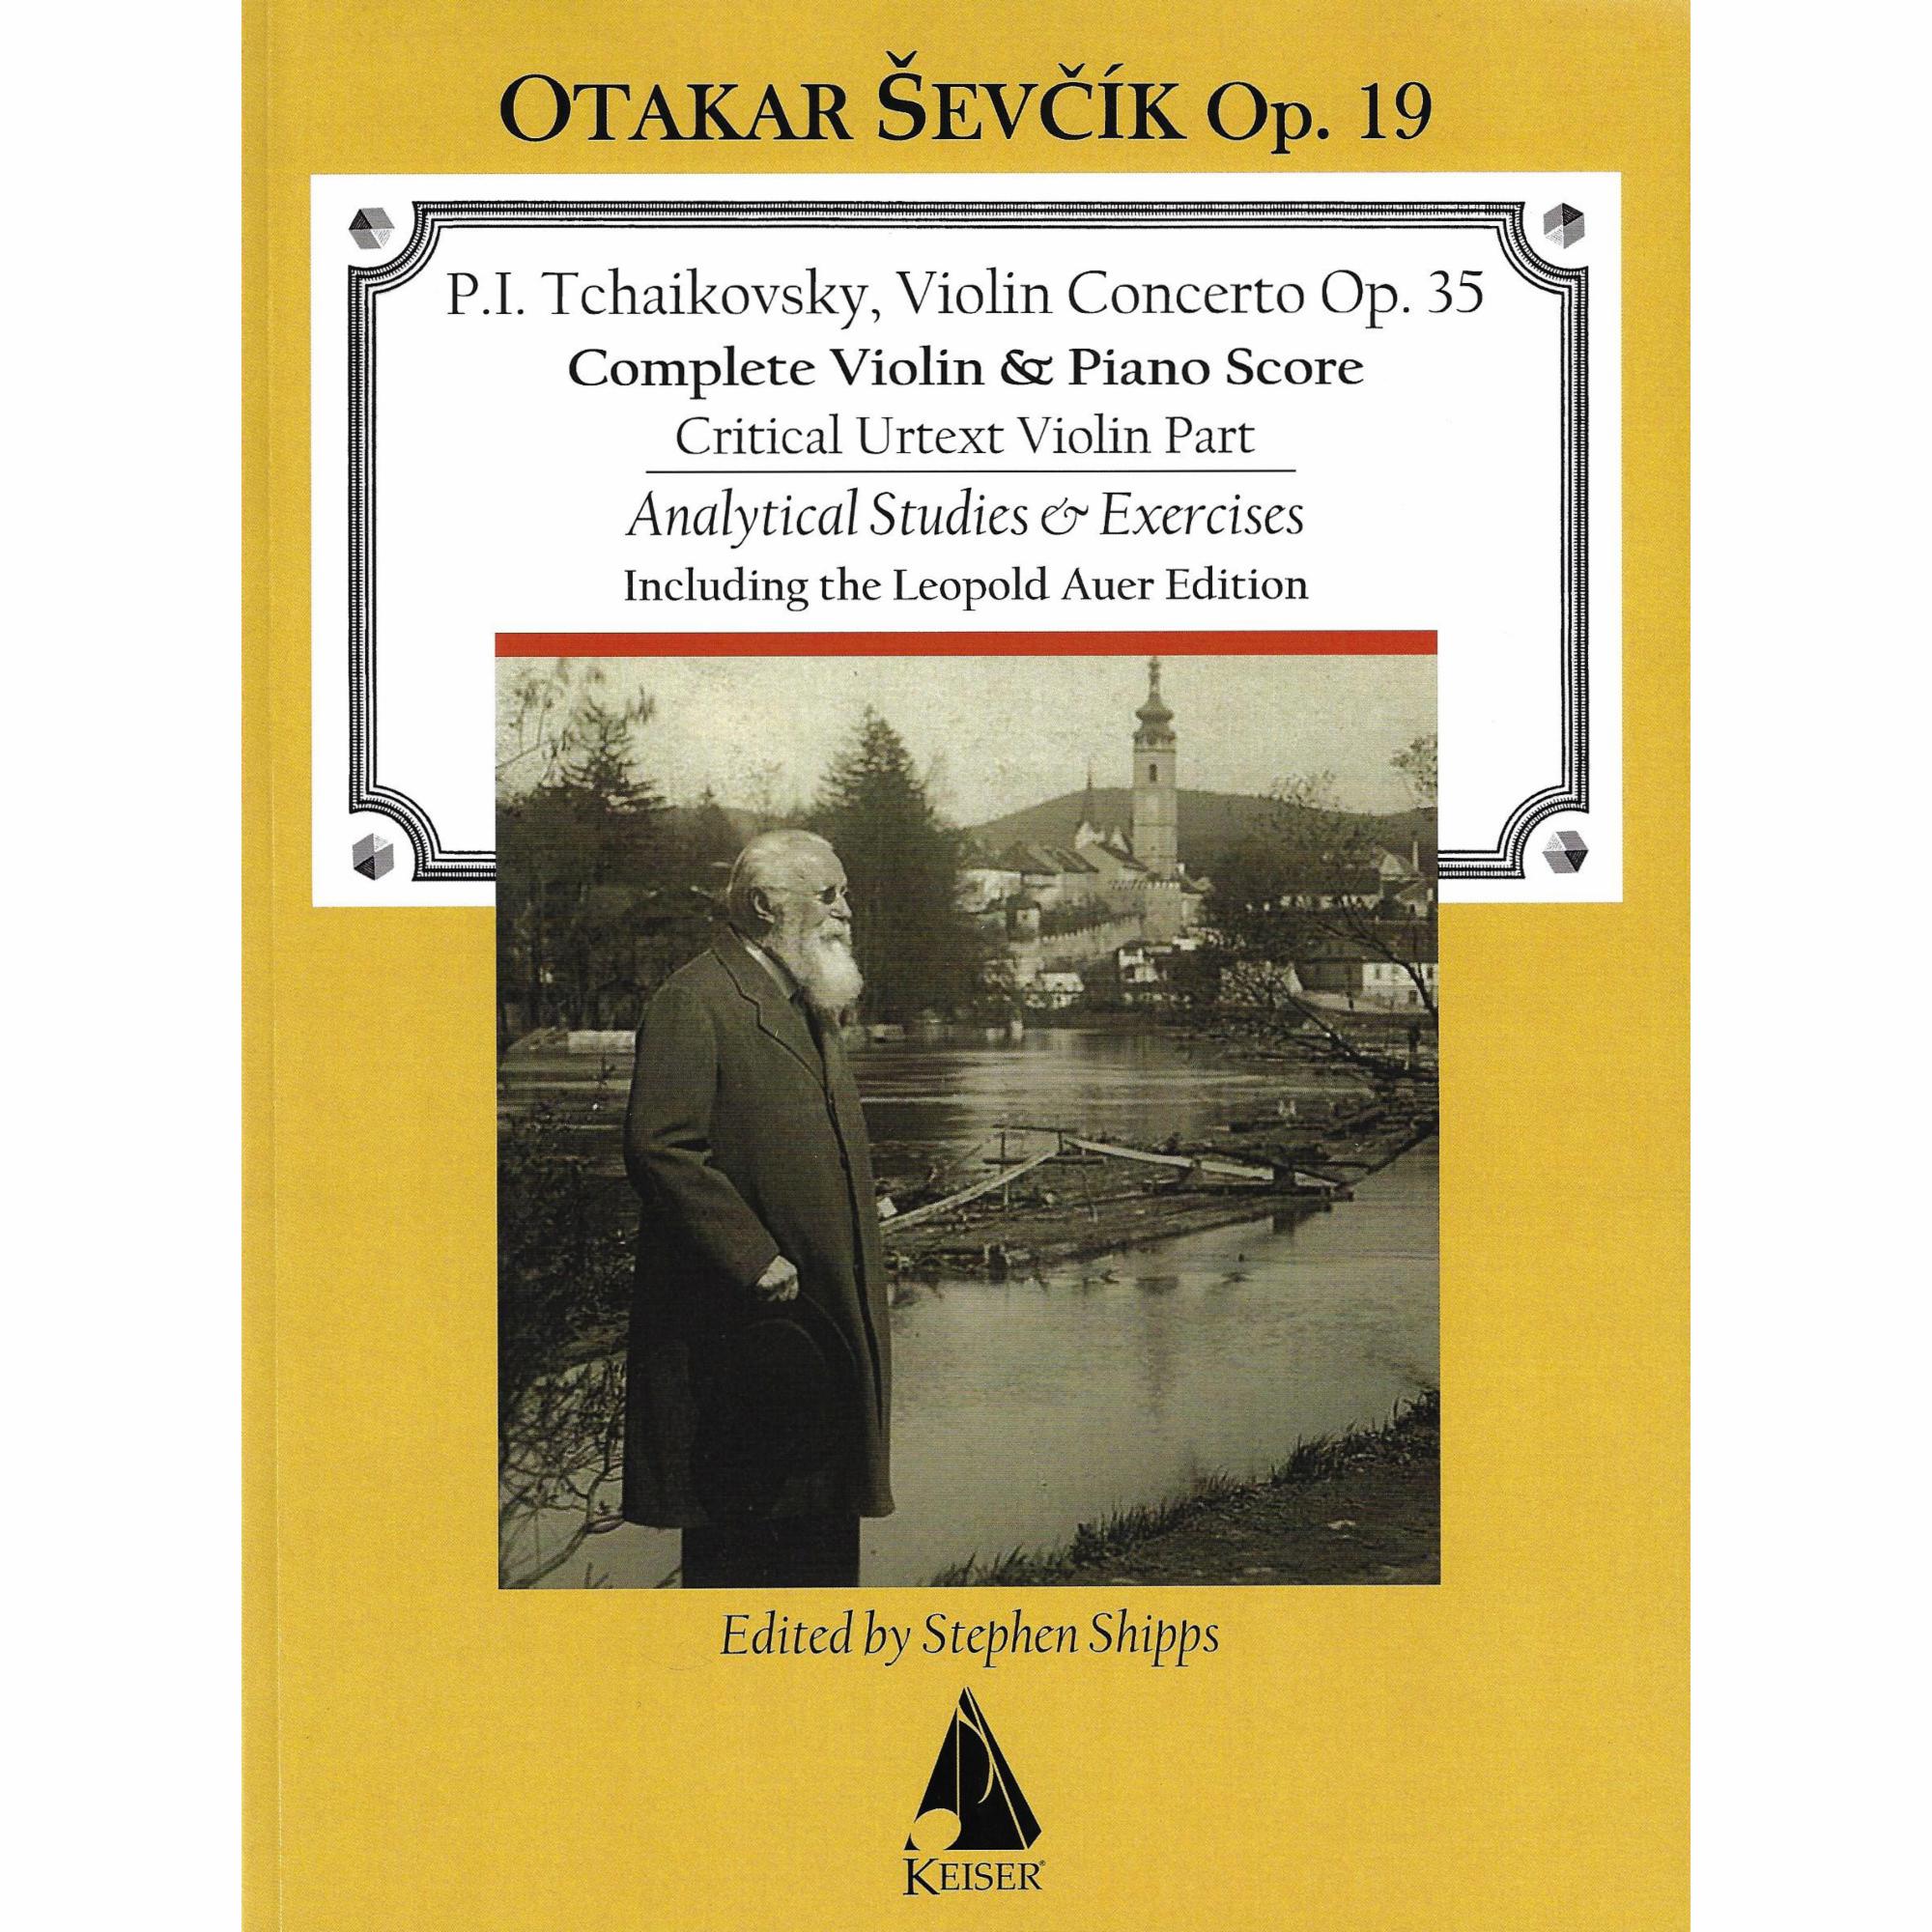 Sevcik -- Analytical Studies & Exercises, Op. 19 (after Tchaikovsky Violin Concerto)